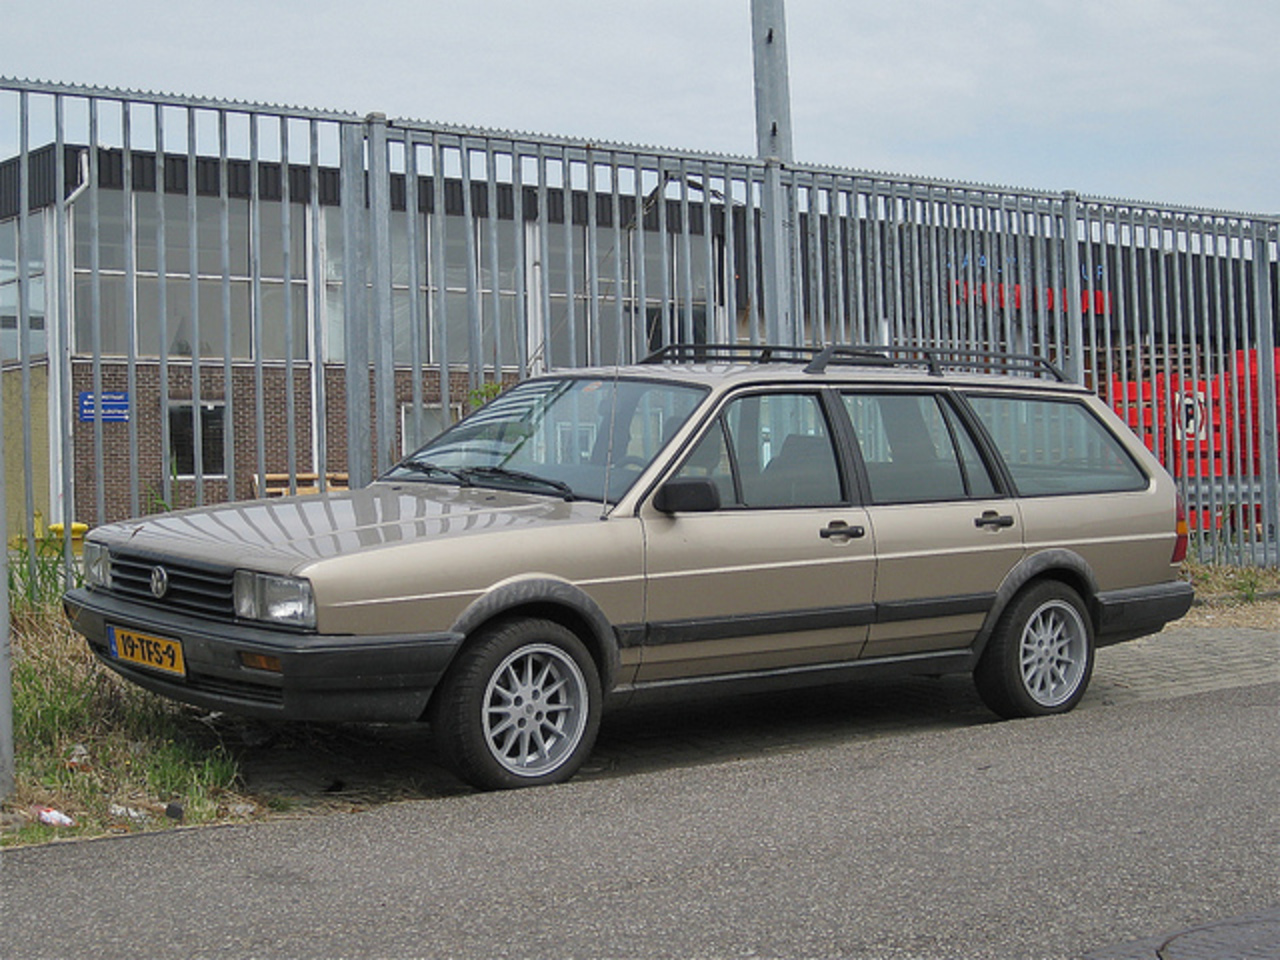 Пассат 2 универсал. Volkswagen Passat b2 универсал. VW Passat b2. VW Passat b2 variant. Фольксваген Пассат универсал 1985.